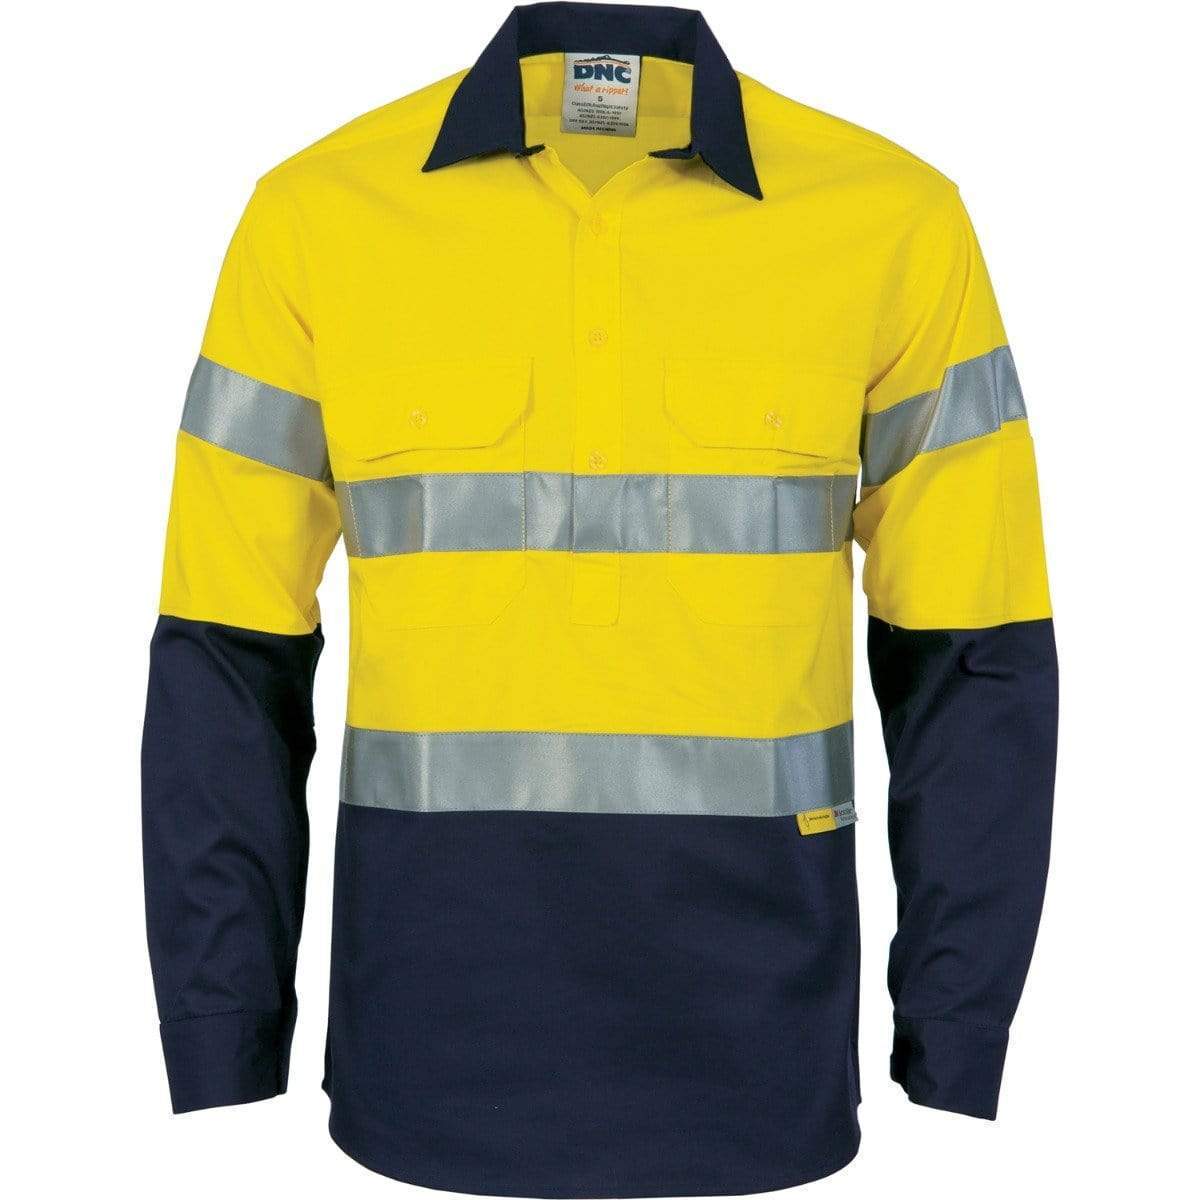 DNC Workwear Work Wear Yellow/Navy / 5XL DNC WORKWEAR Hi-Vis Cool-Breeze Close Front Long Sleeve Cotton Shirt with 3M Reflective Tape 3949